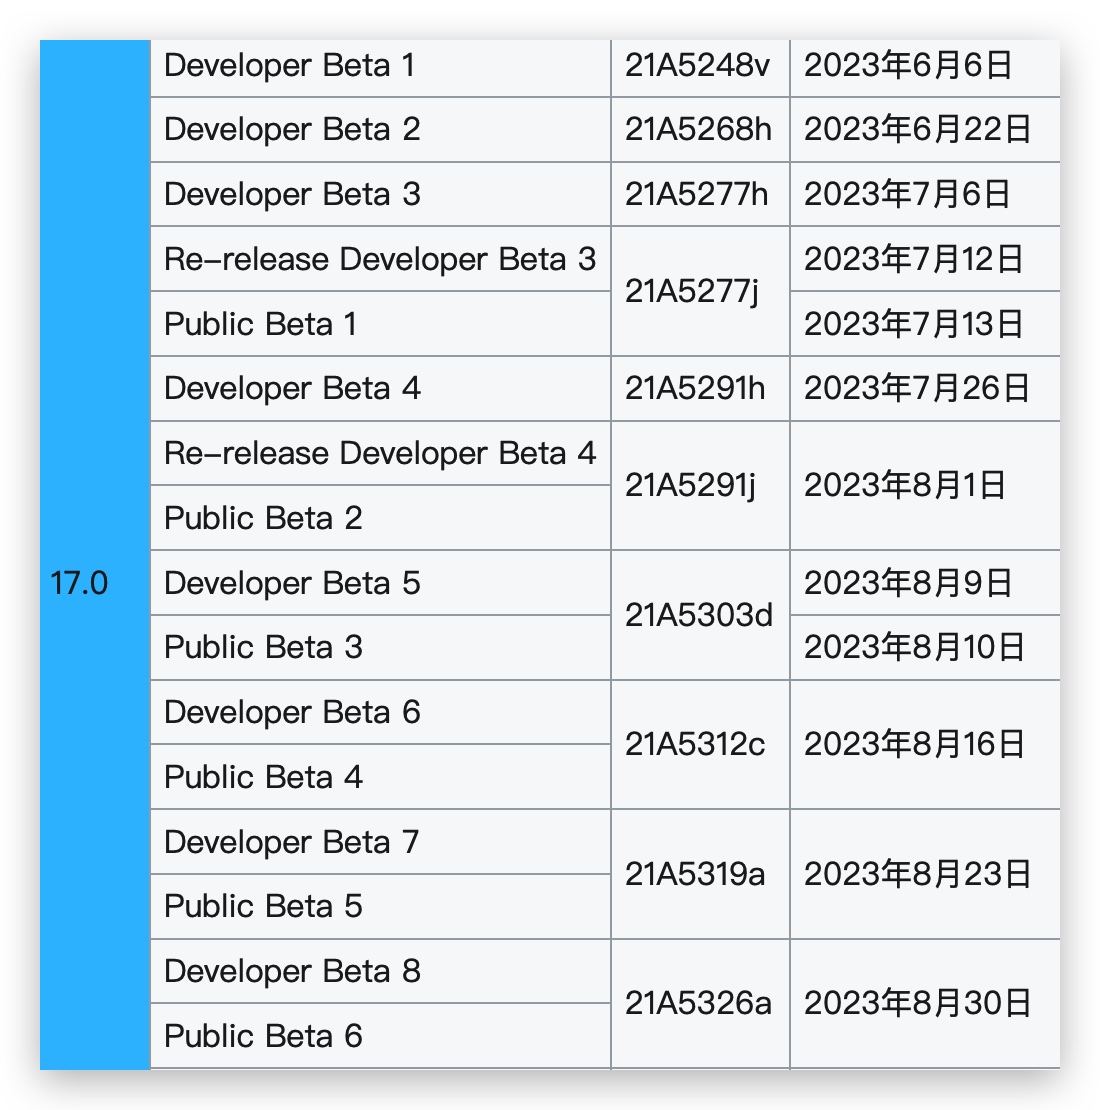 iOS iPhone iOS 18 iOS 18 Beta iOS 18 Public Beta iOS 18 Developer Beta